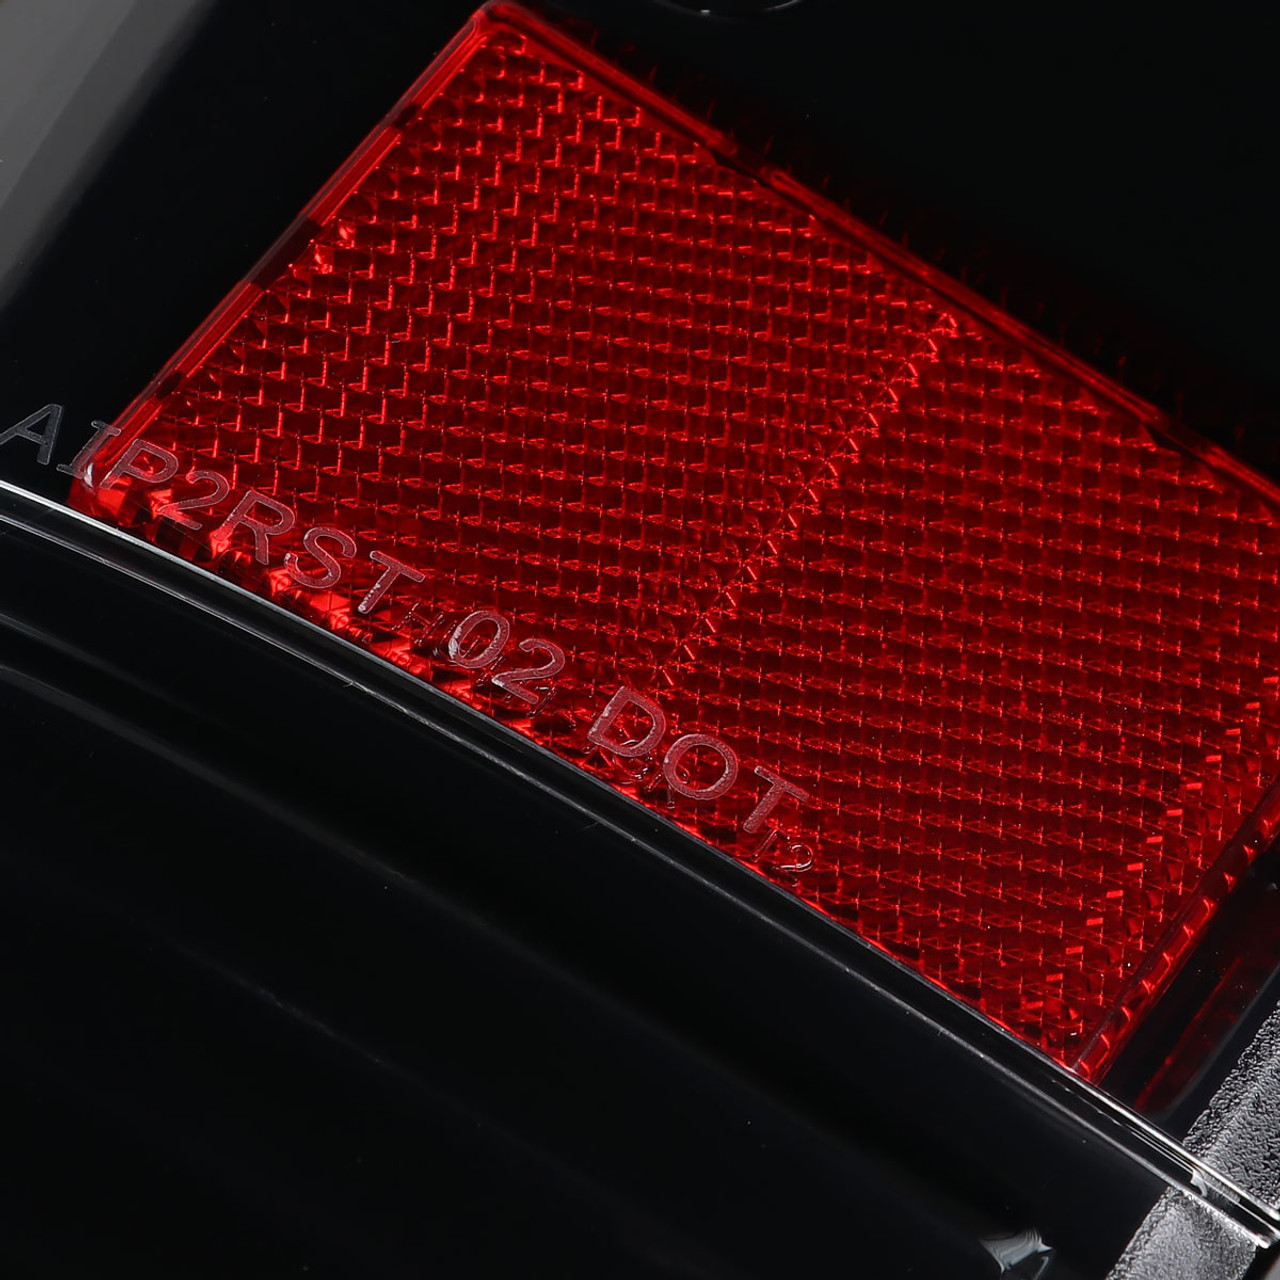 2007-2009 Dodge RAM 1500/2500/3500 Red C-Bar LED Tail Lights (Jet